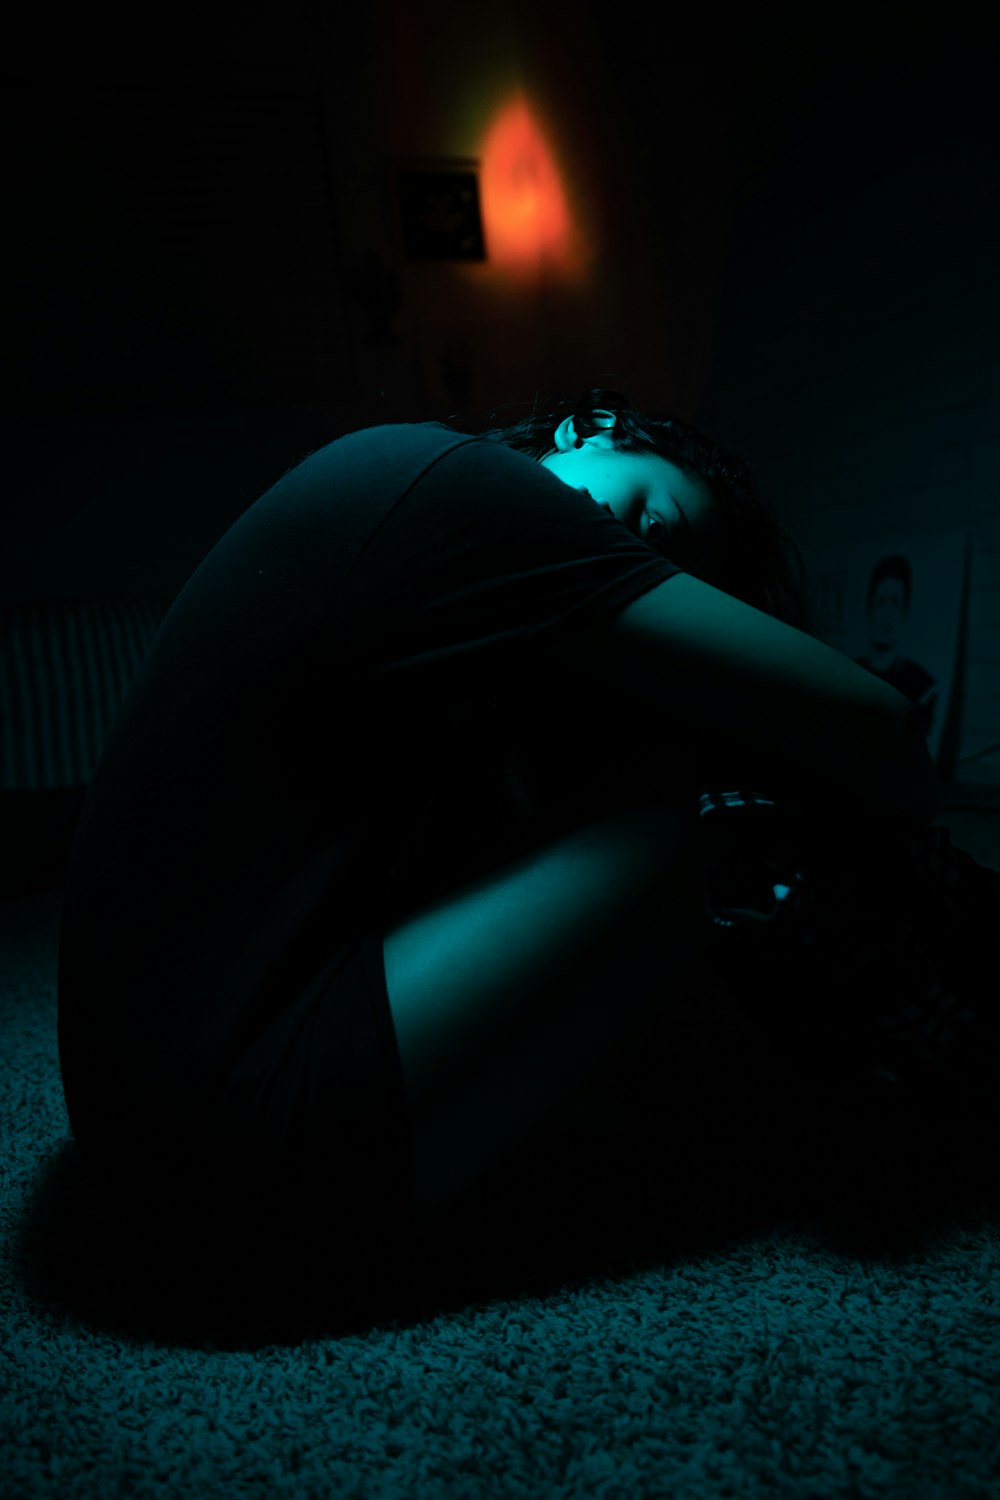 woman in black dress sitting on floor